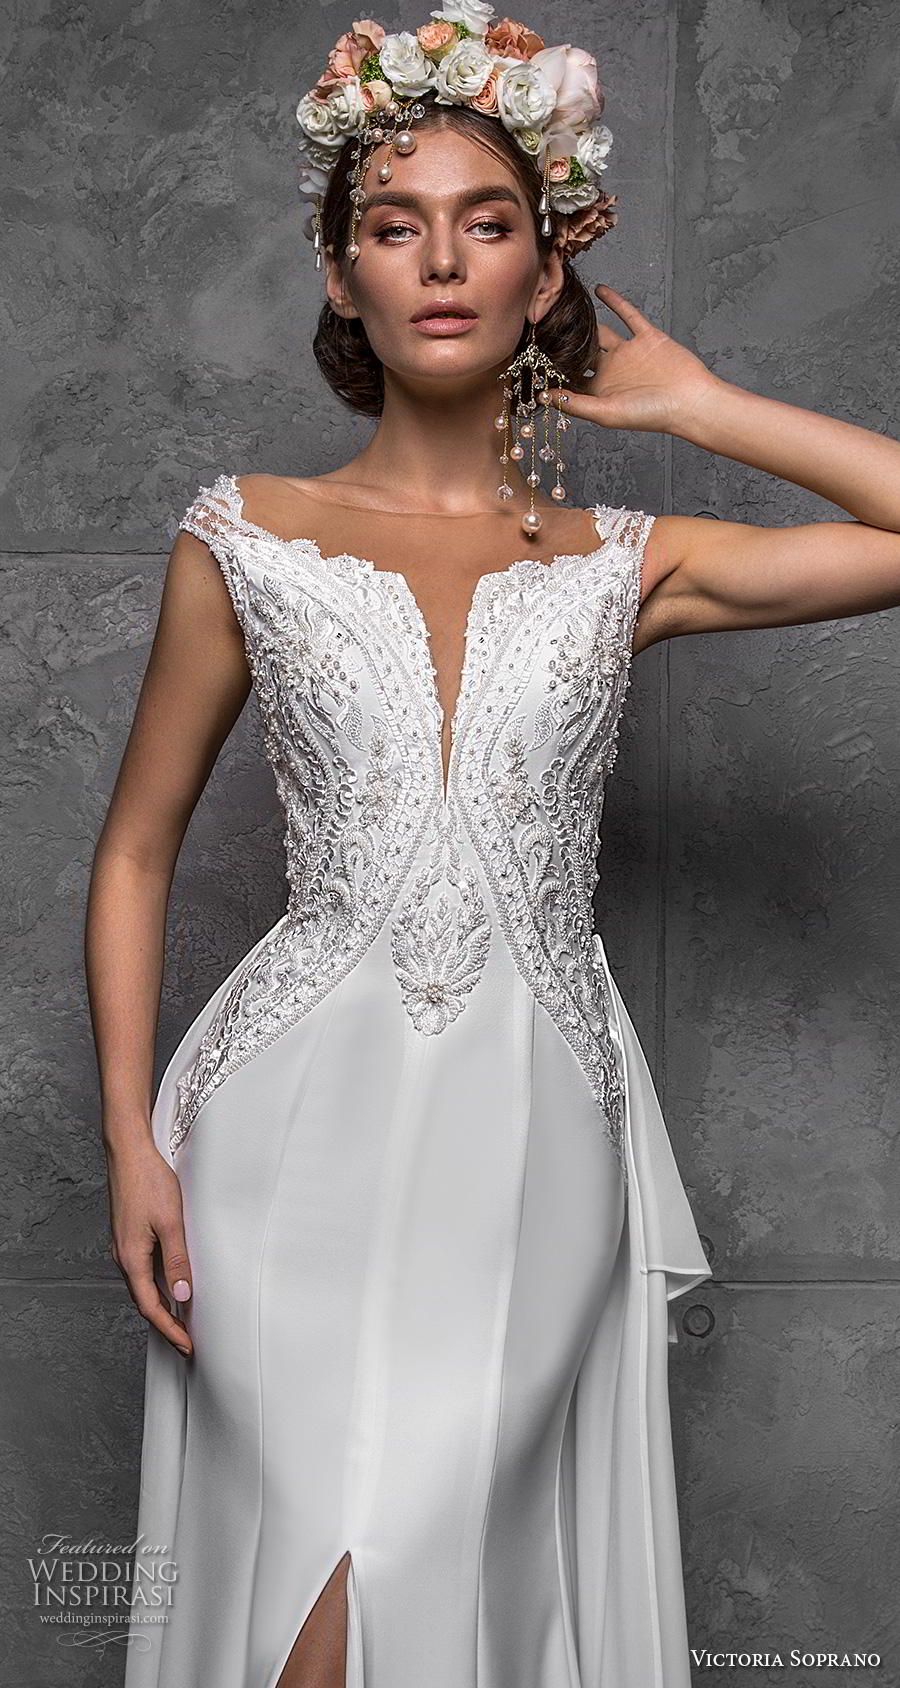 Victoria Soprano 2020 Wedding Dresses — “Chic Royal” Bridal Collection ...